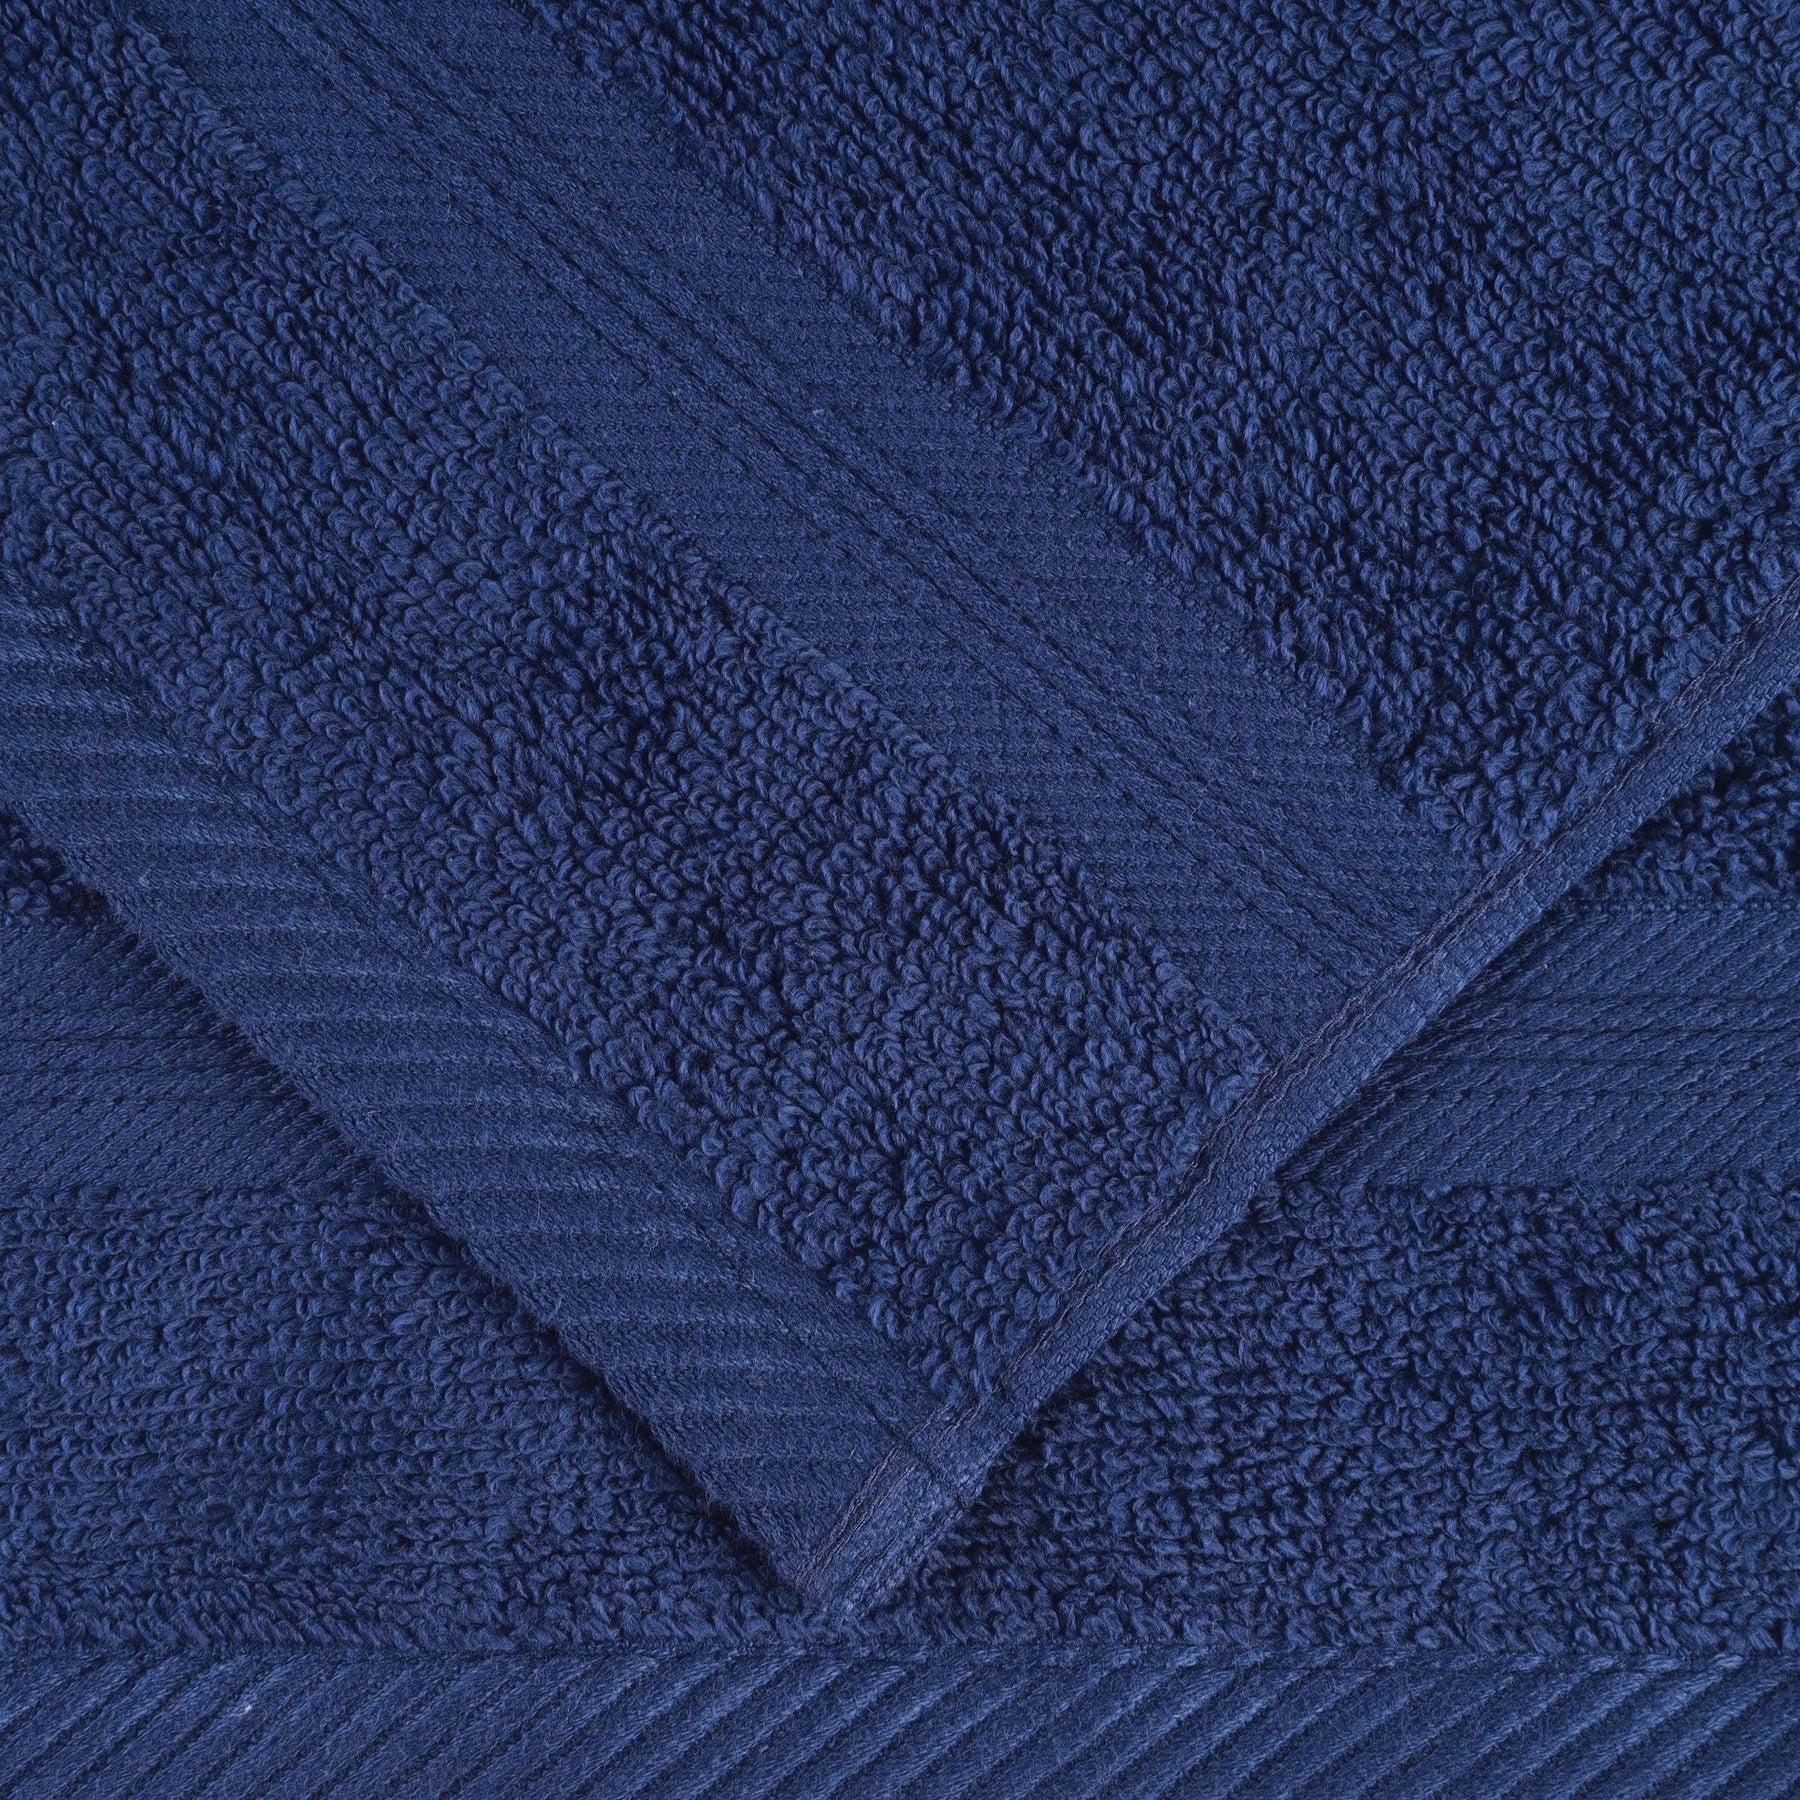 Superior Soho 6 Piece Cotton Towel Set Navy Blue